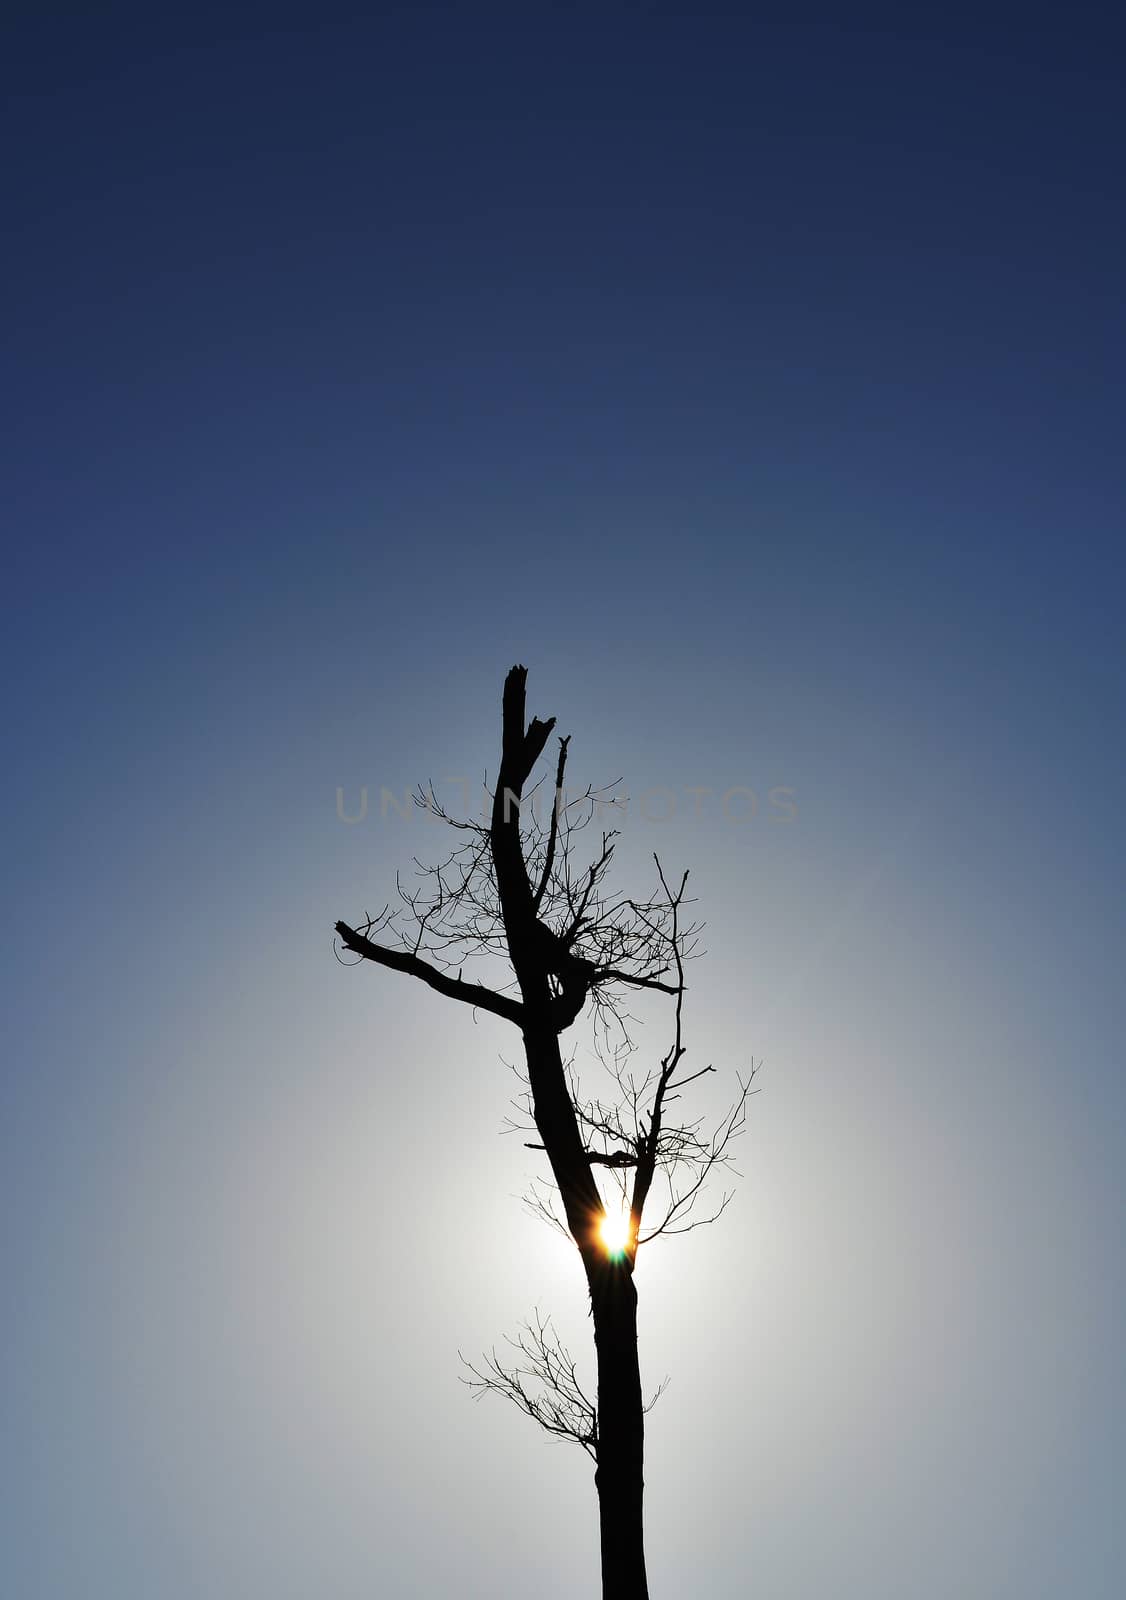 Tree Silhouette with Sunshine by kobfujar